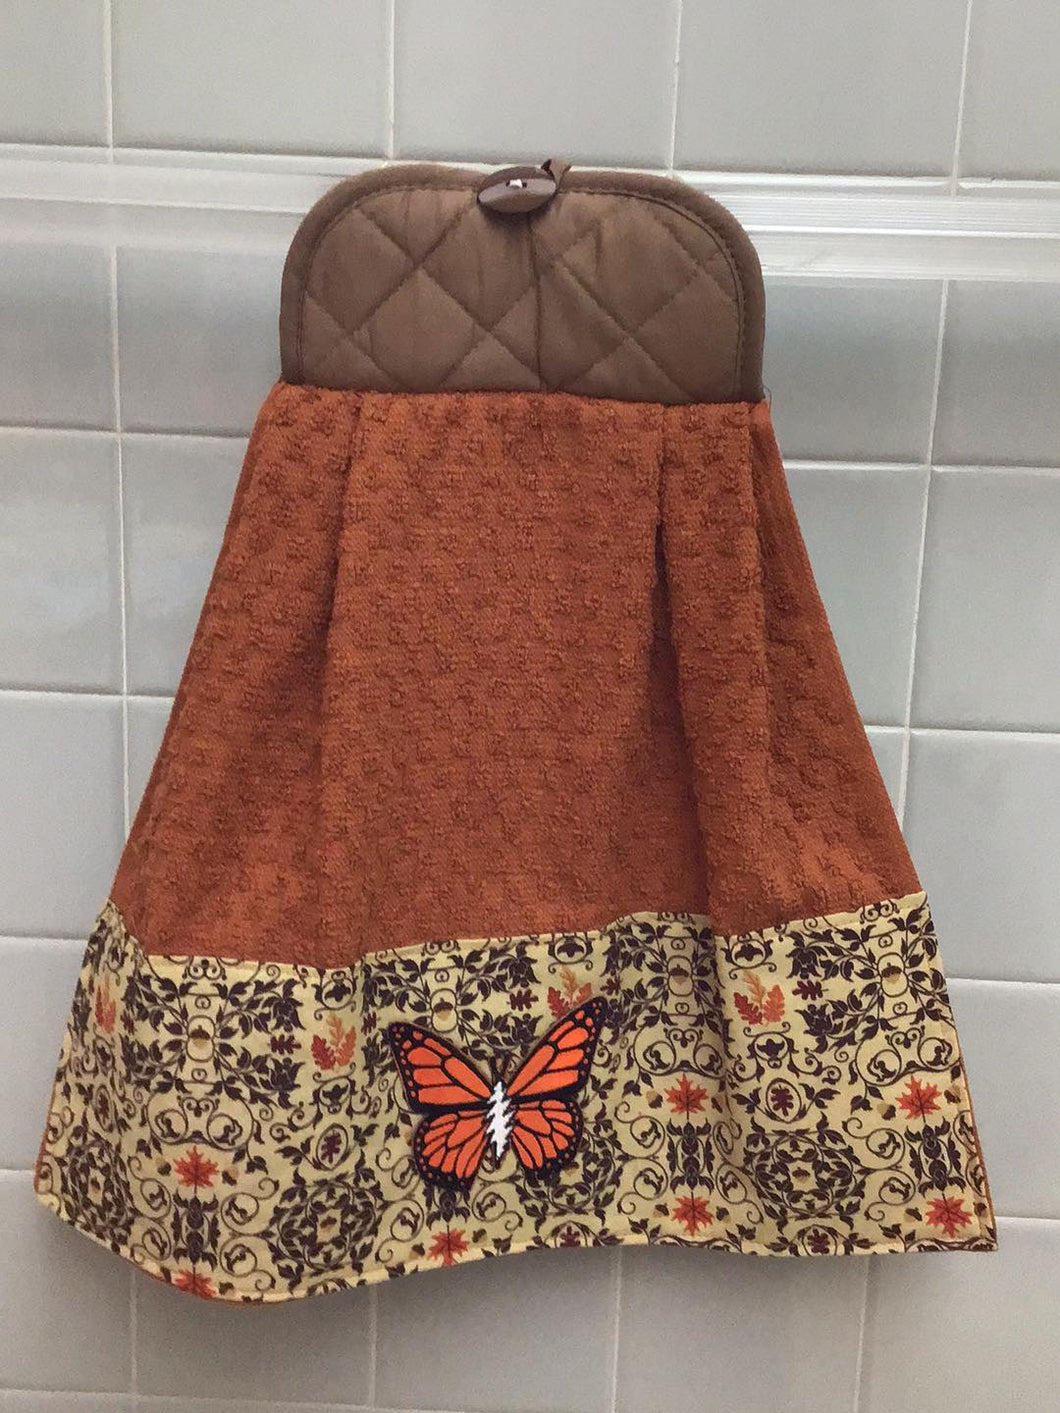 Autumn Monarch Decorative Towel - One Of A Kind